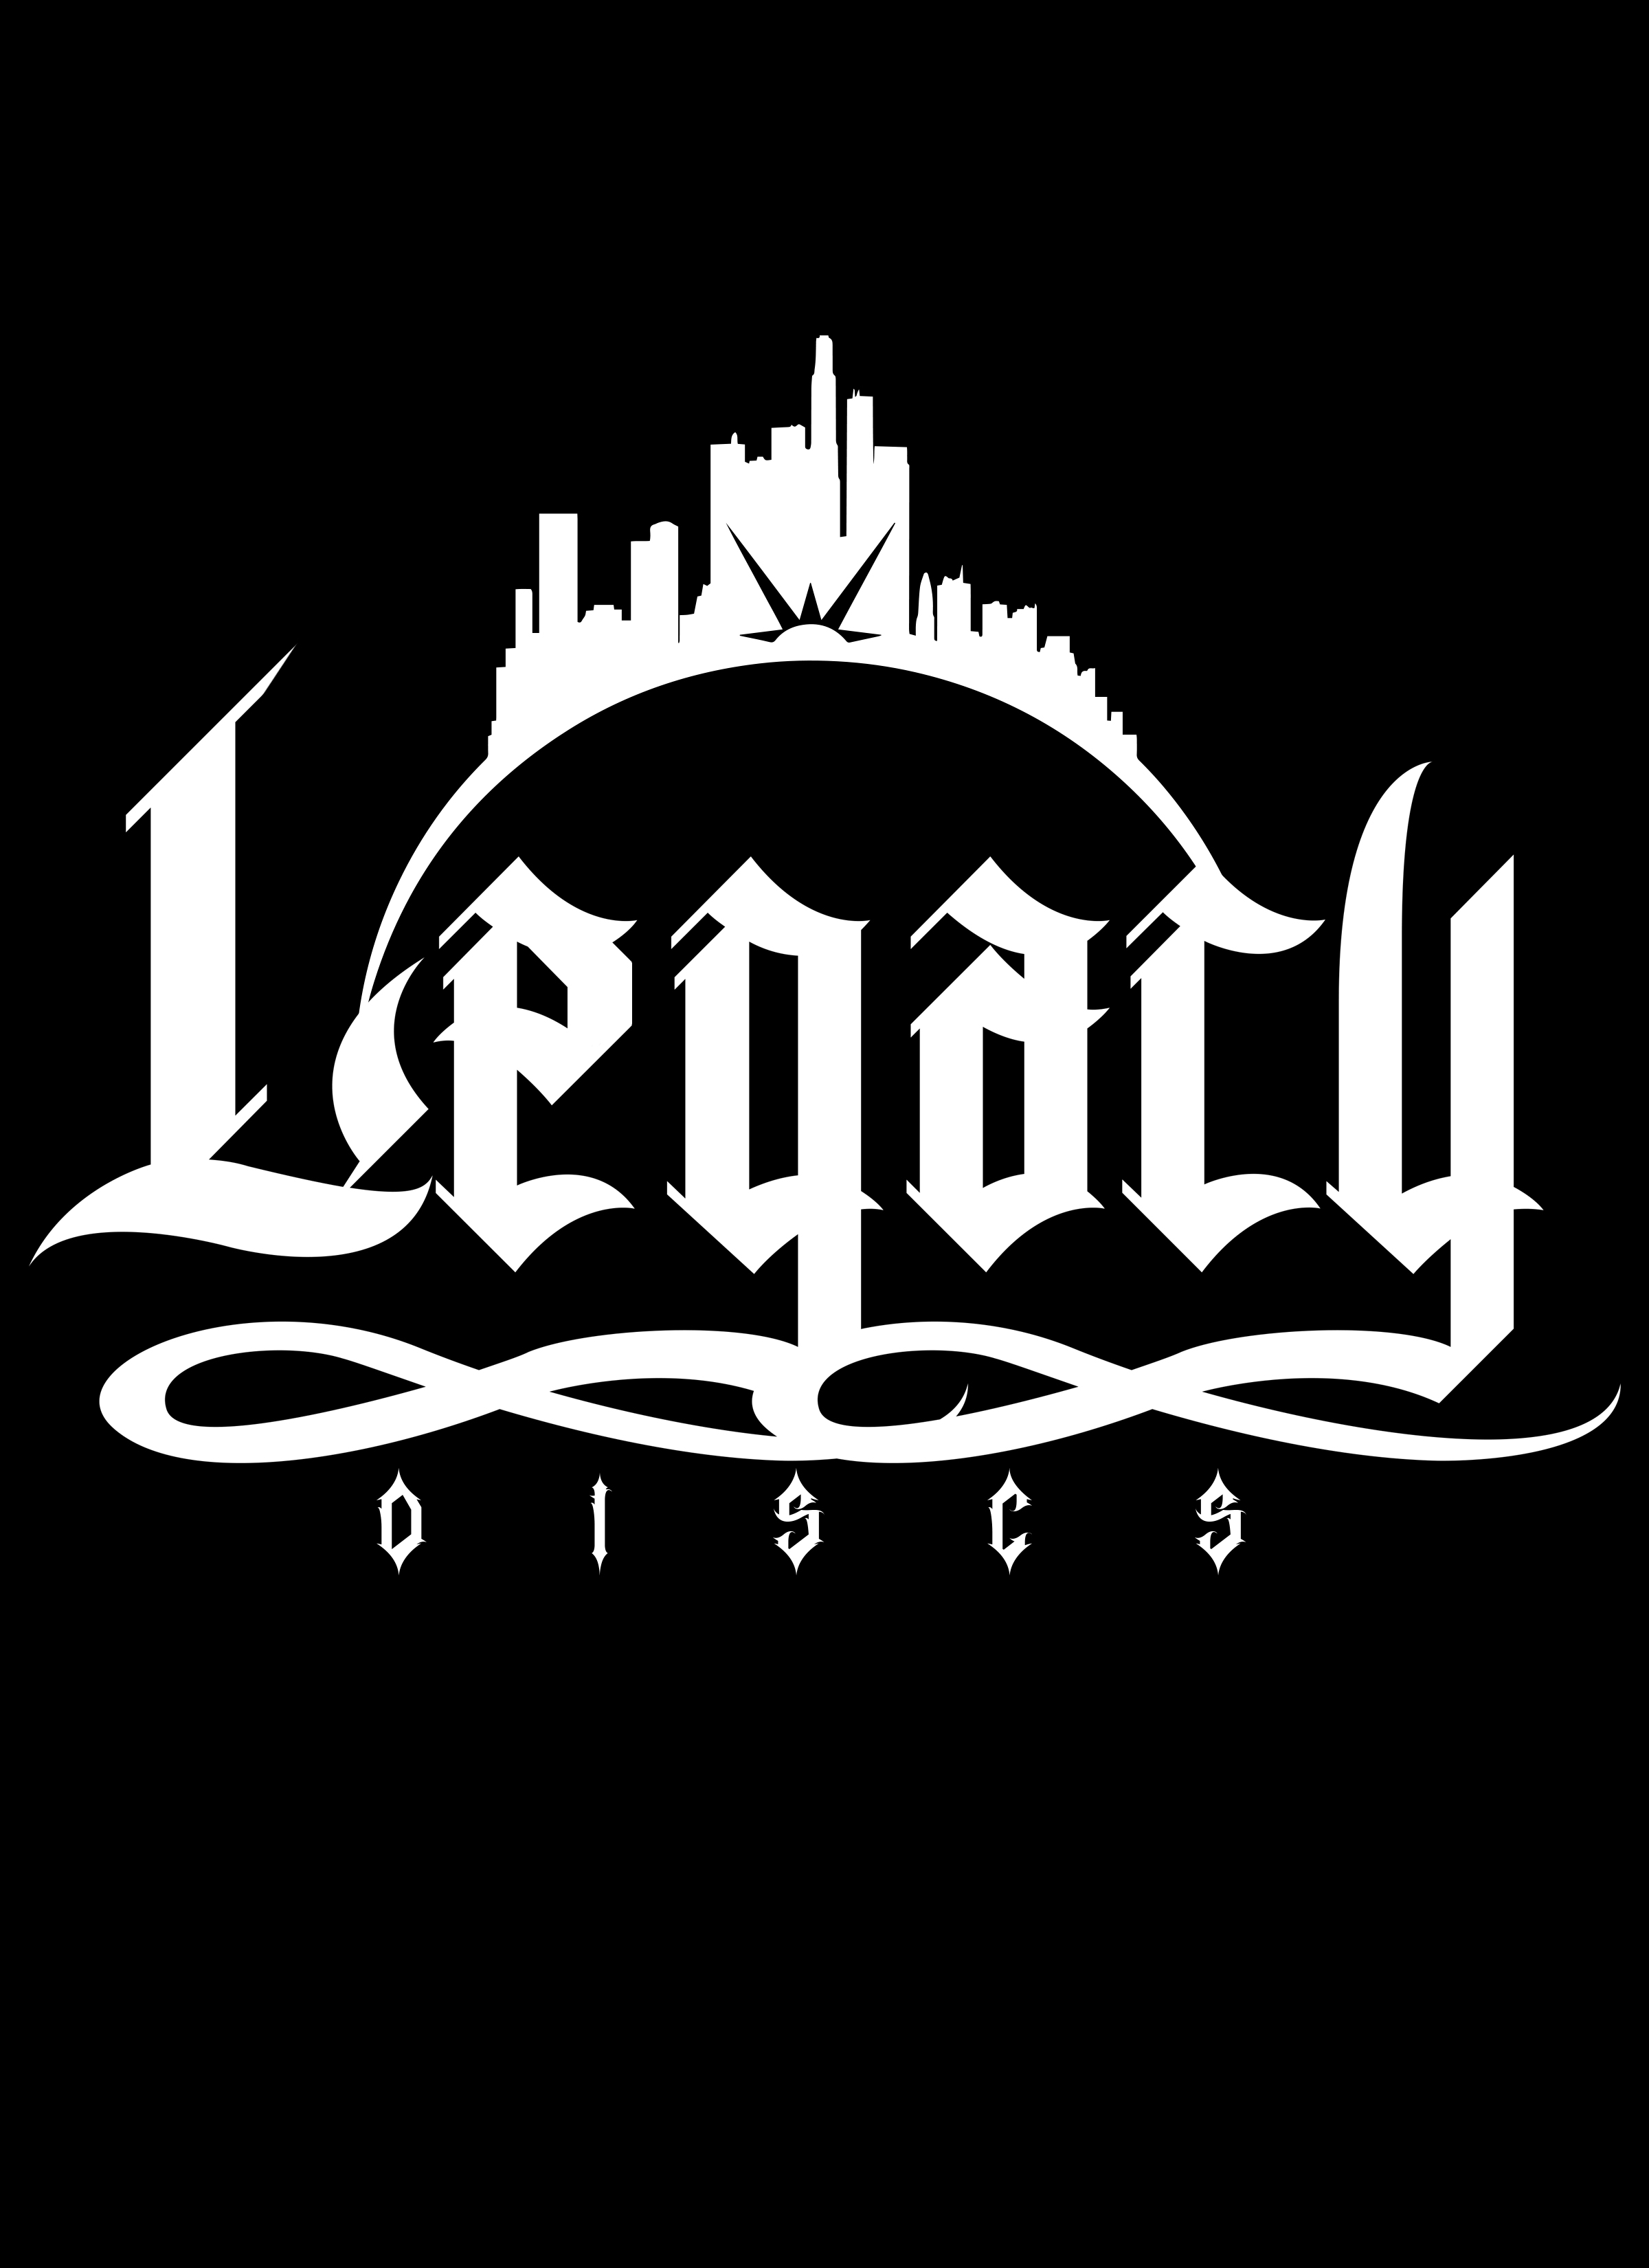 Legacy residential complex logo